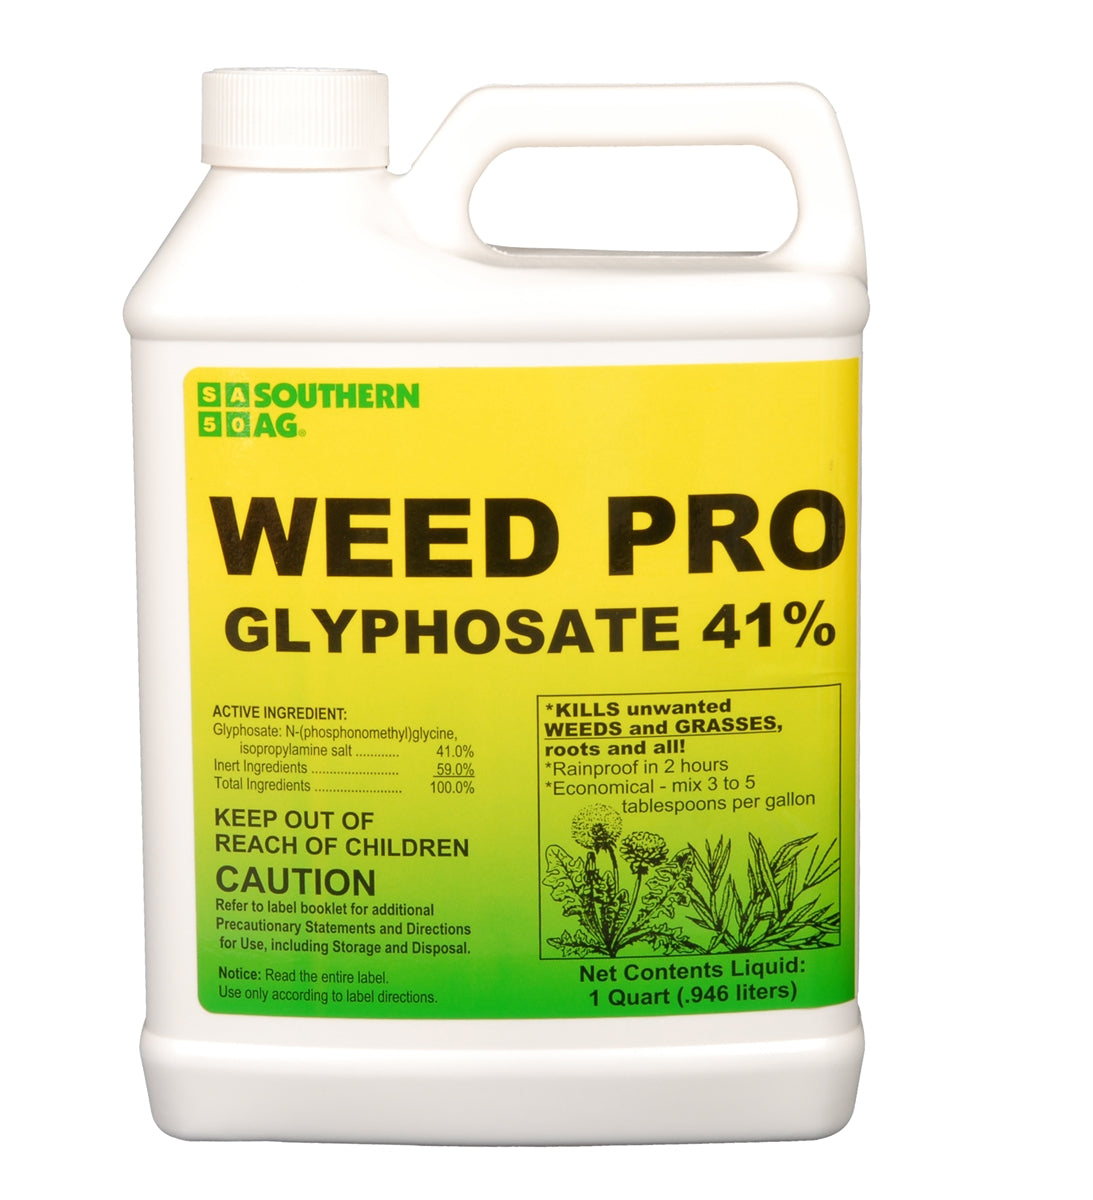 Weed Pro Glyphosate 41% (Roundup) - 1 Quart